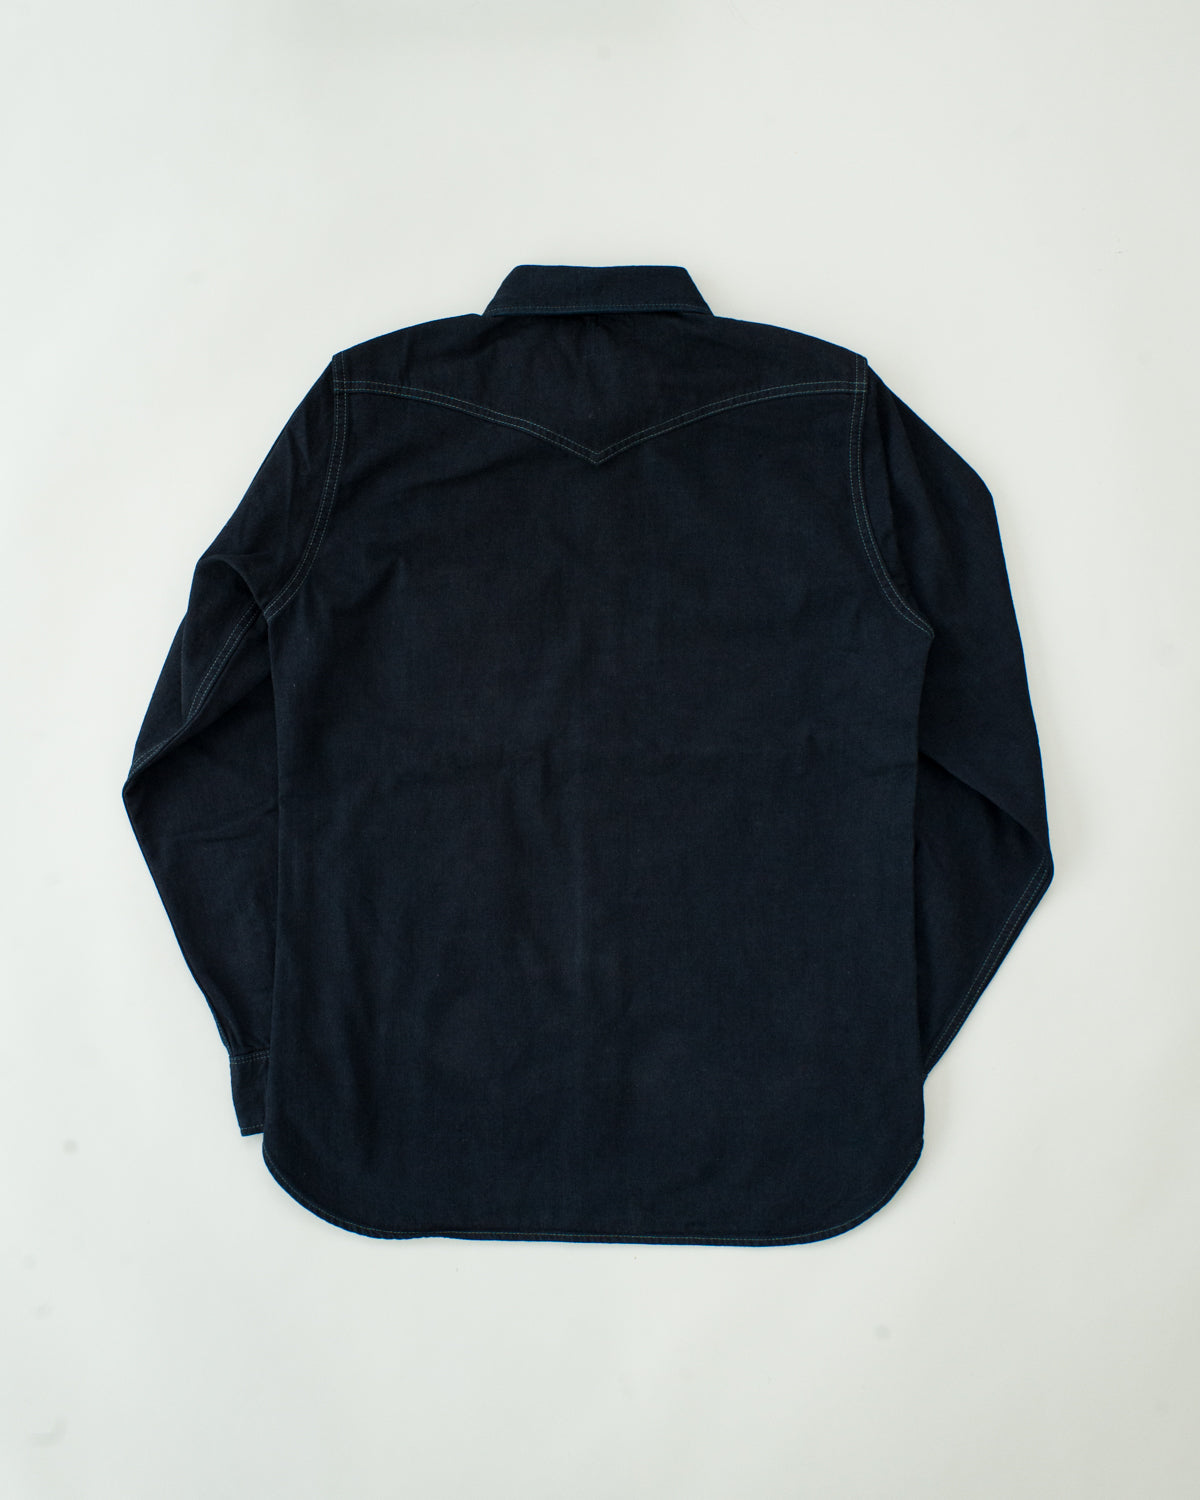 IHSH-321-OD - 10oz Selvedge Denim Western Shirt - Indigo Overdyed Black